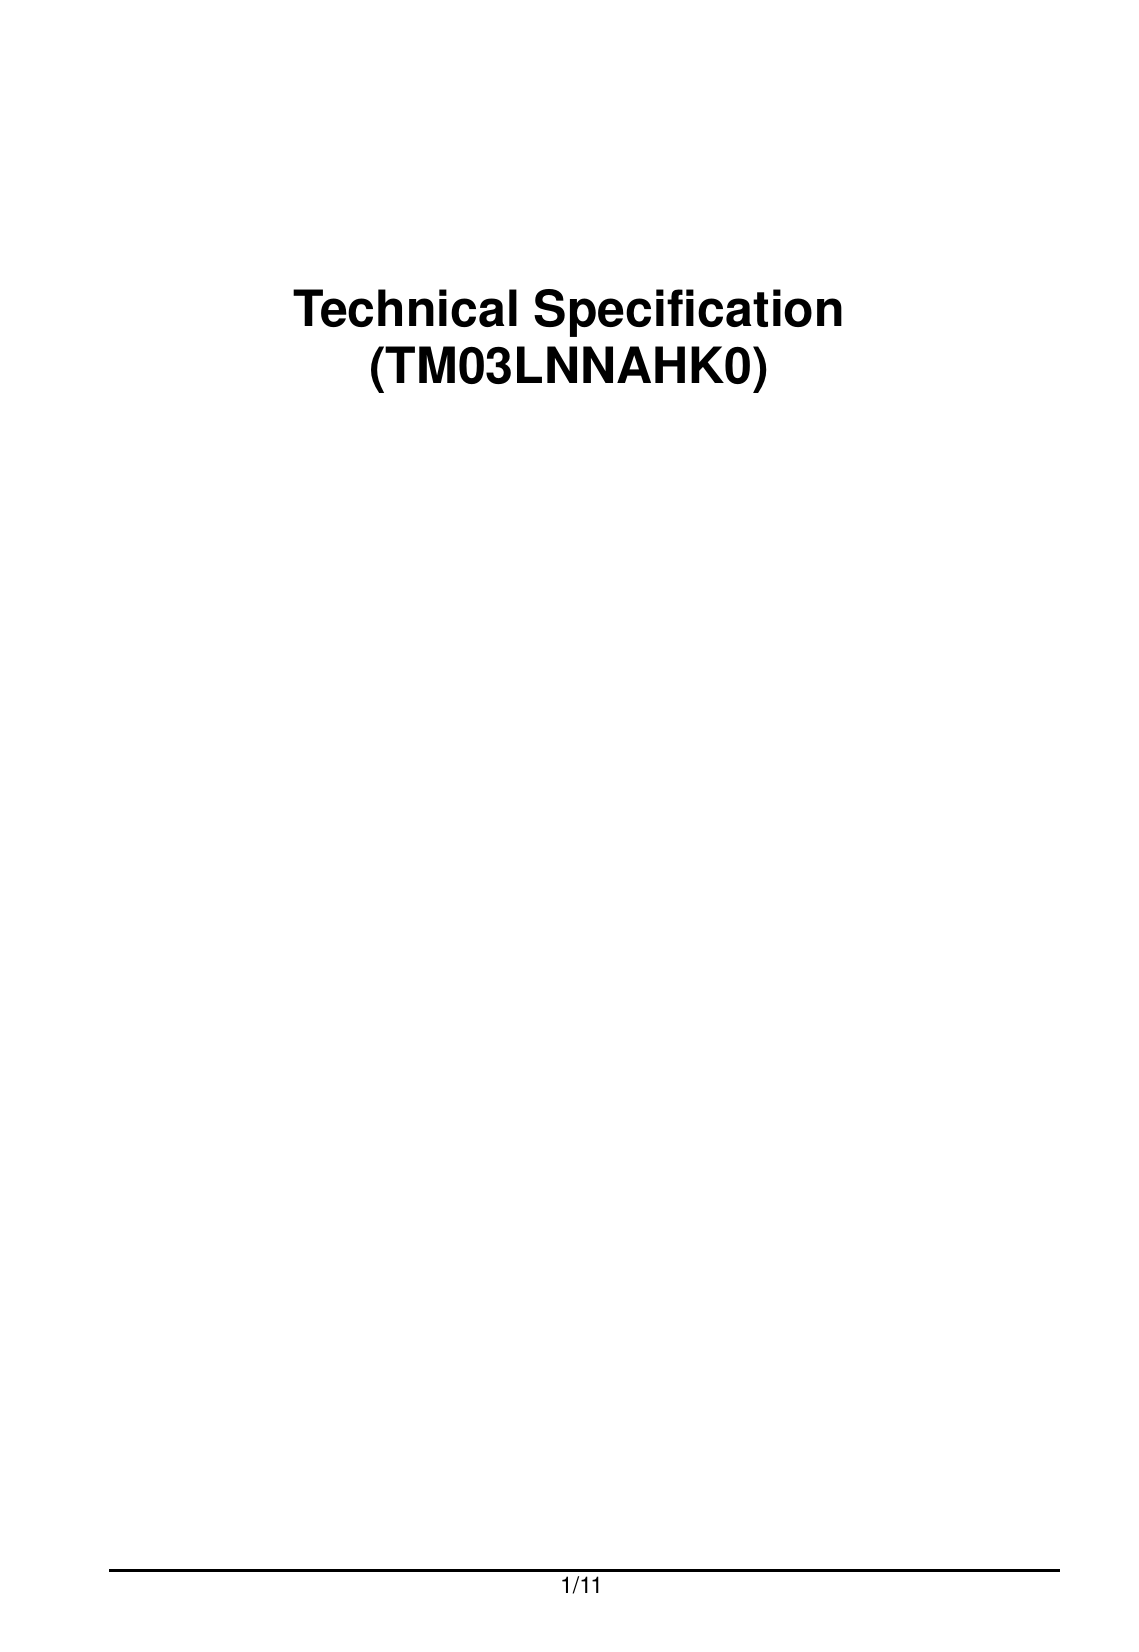  1/11      Technical Specification (TM03LNNAHK0)           